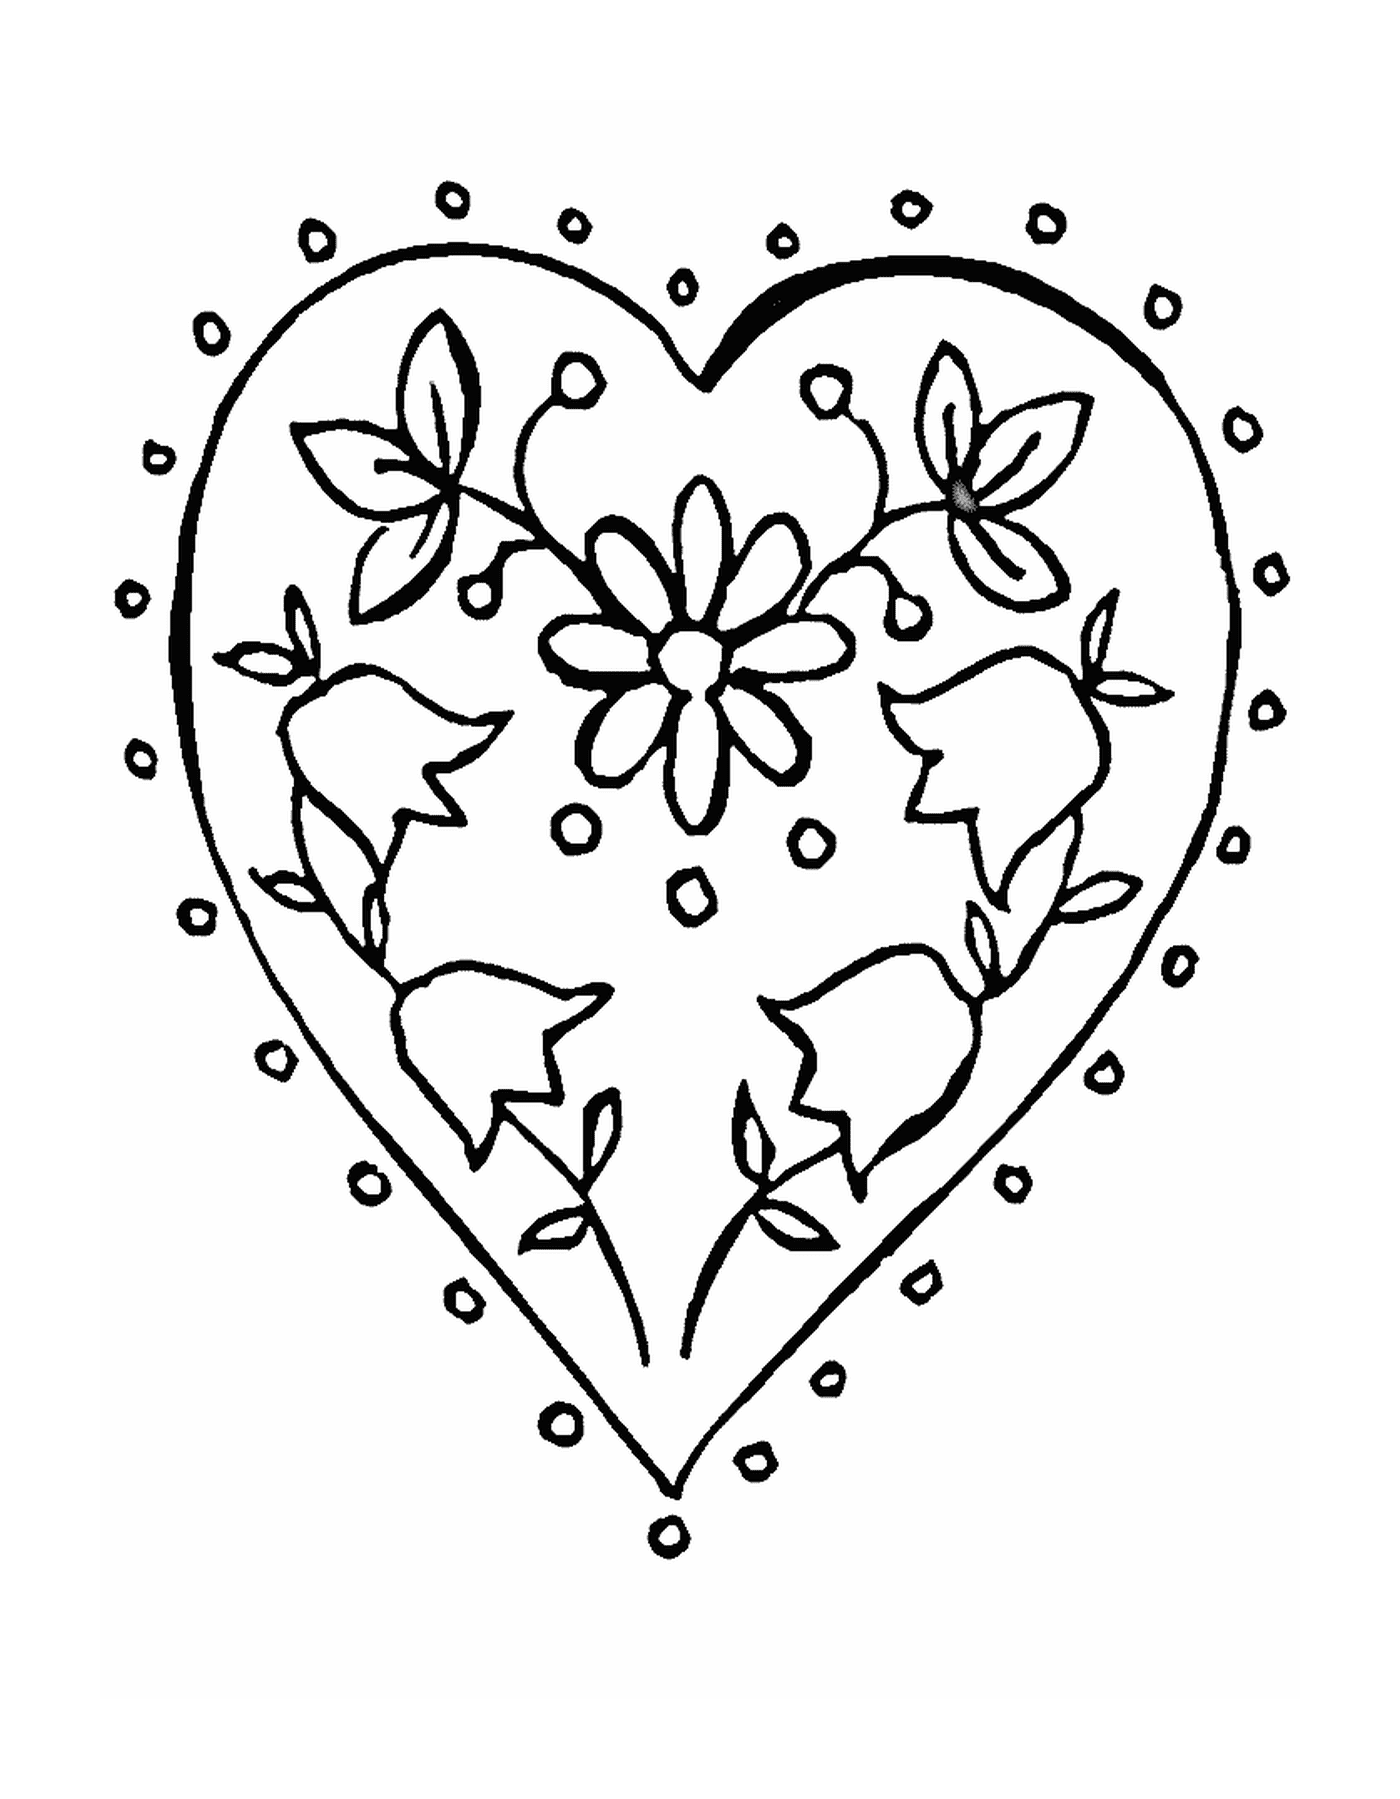  Un corazón decorado con flores 